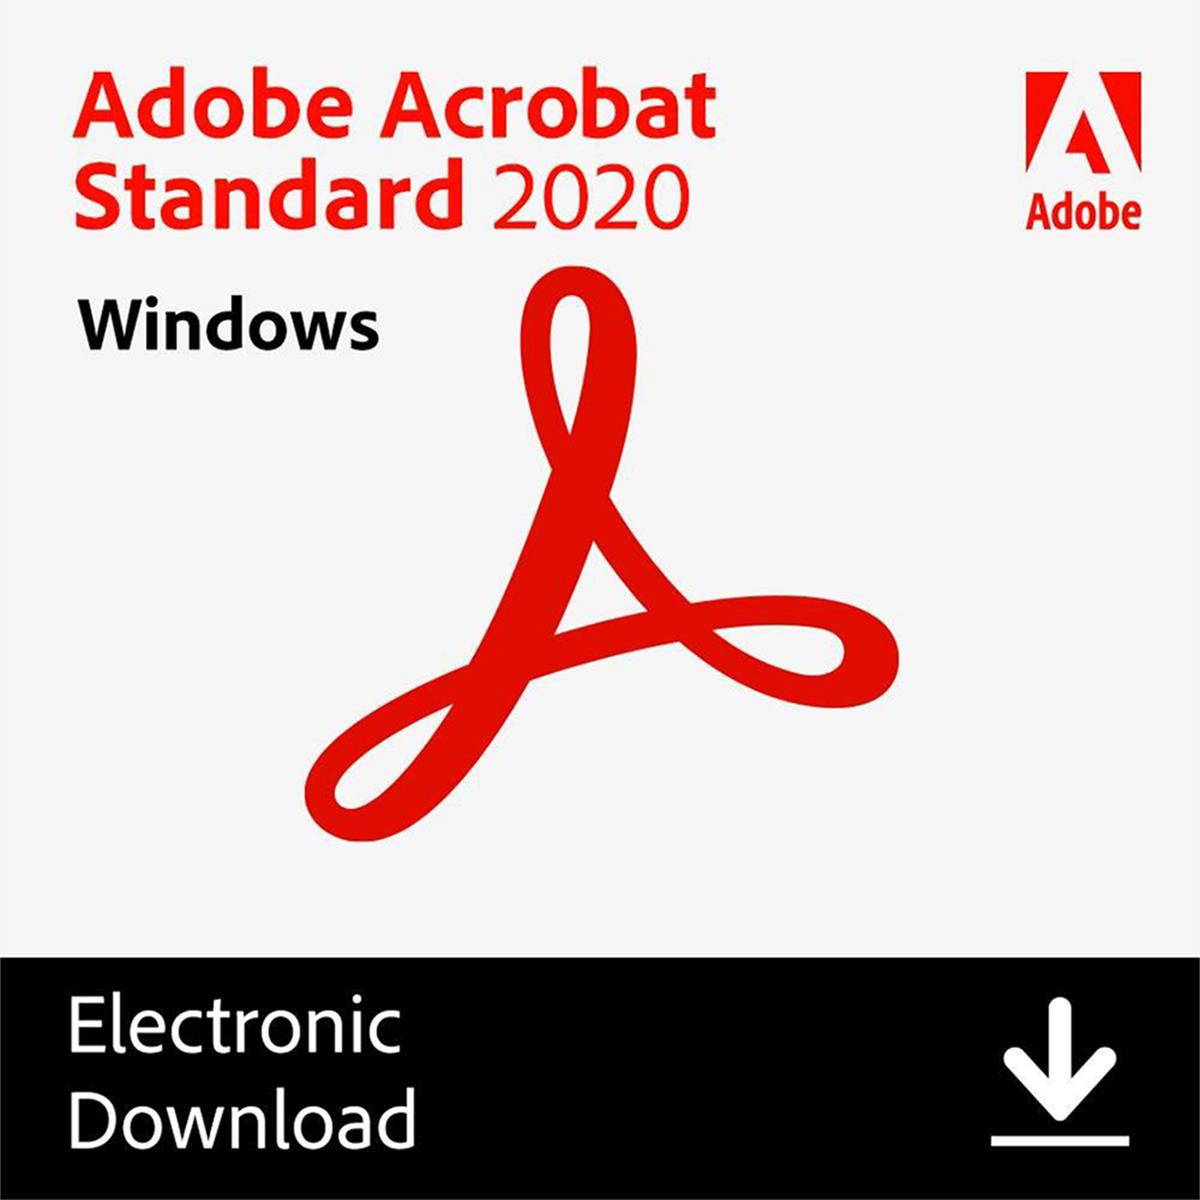 Adobe Acrobat Standard 2020 Perpetual License for Windows, Download -  65314923